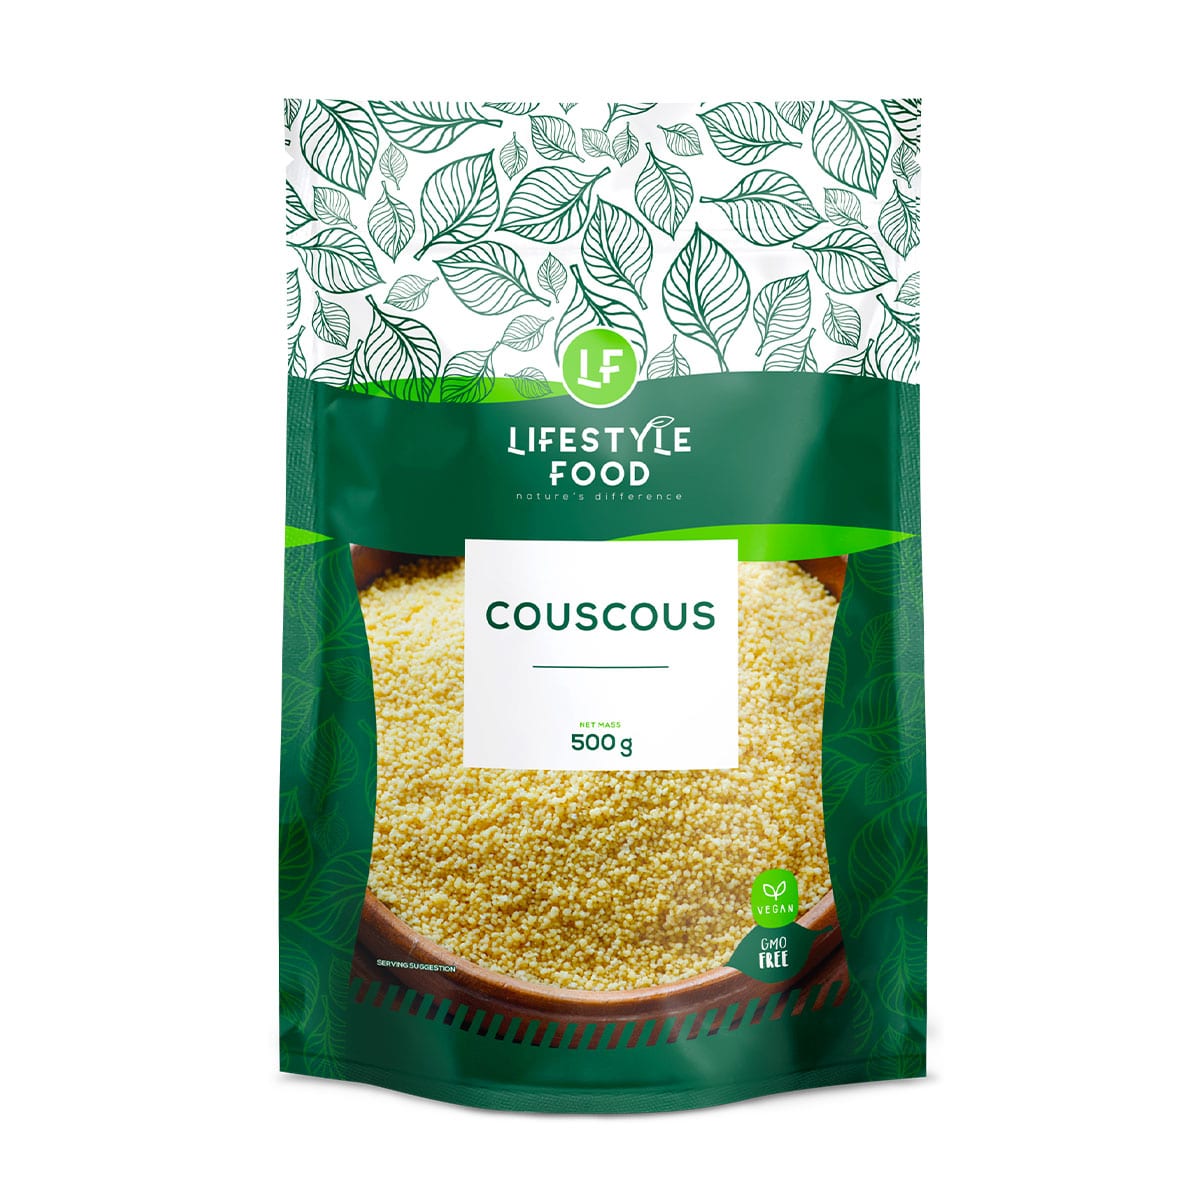 Lifestyle Food Couscous - 500g